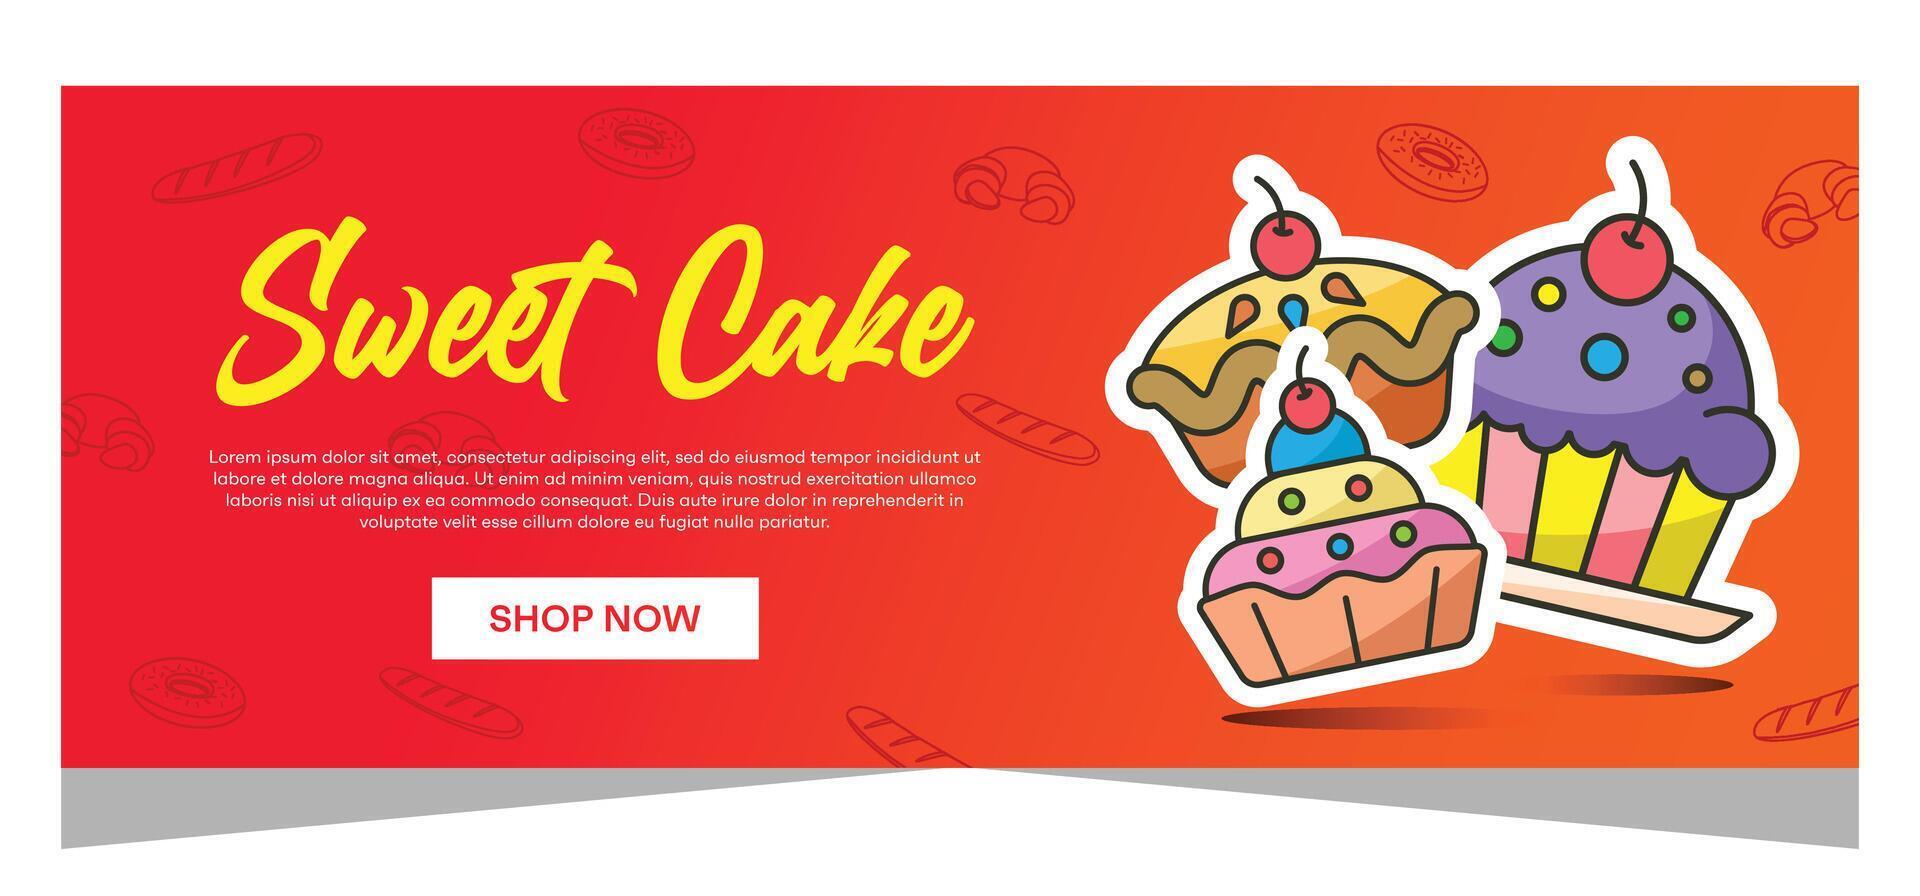 Horizontal banner of sweet cupcakes vector design